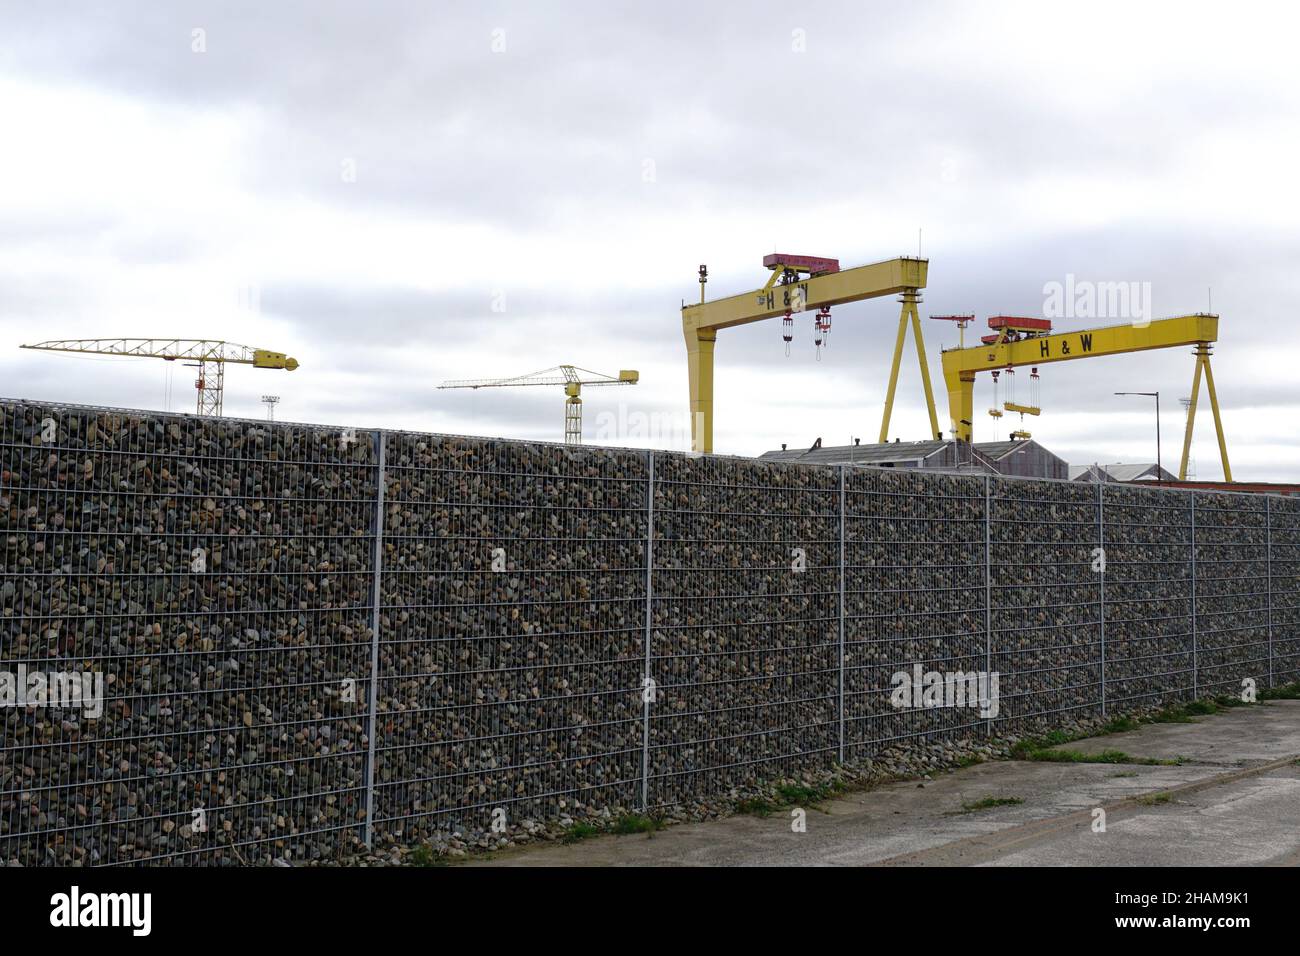 Harland and Wolf Shipyard cranes. October 2018, Belfast, Northern Ireland Stock Photo